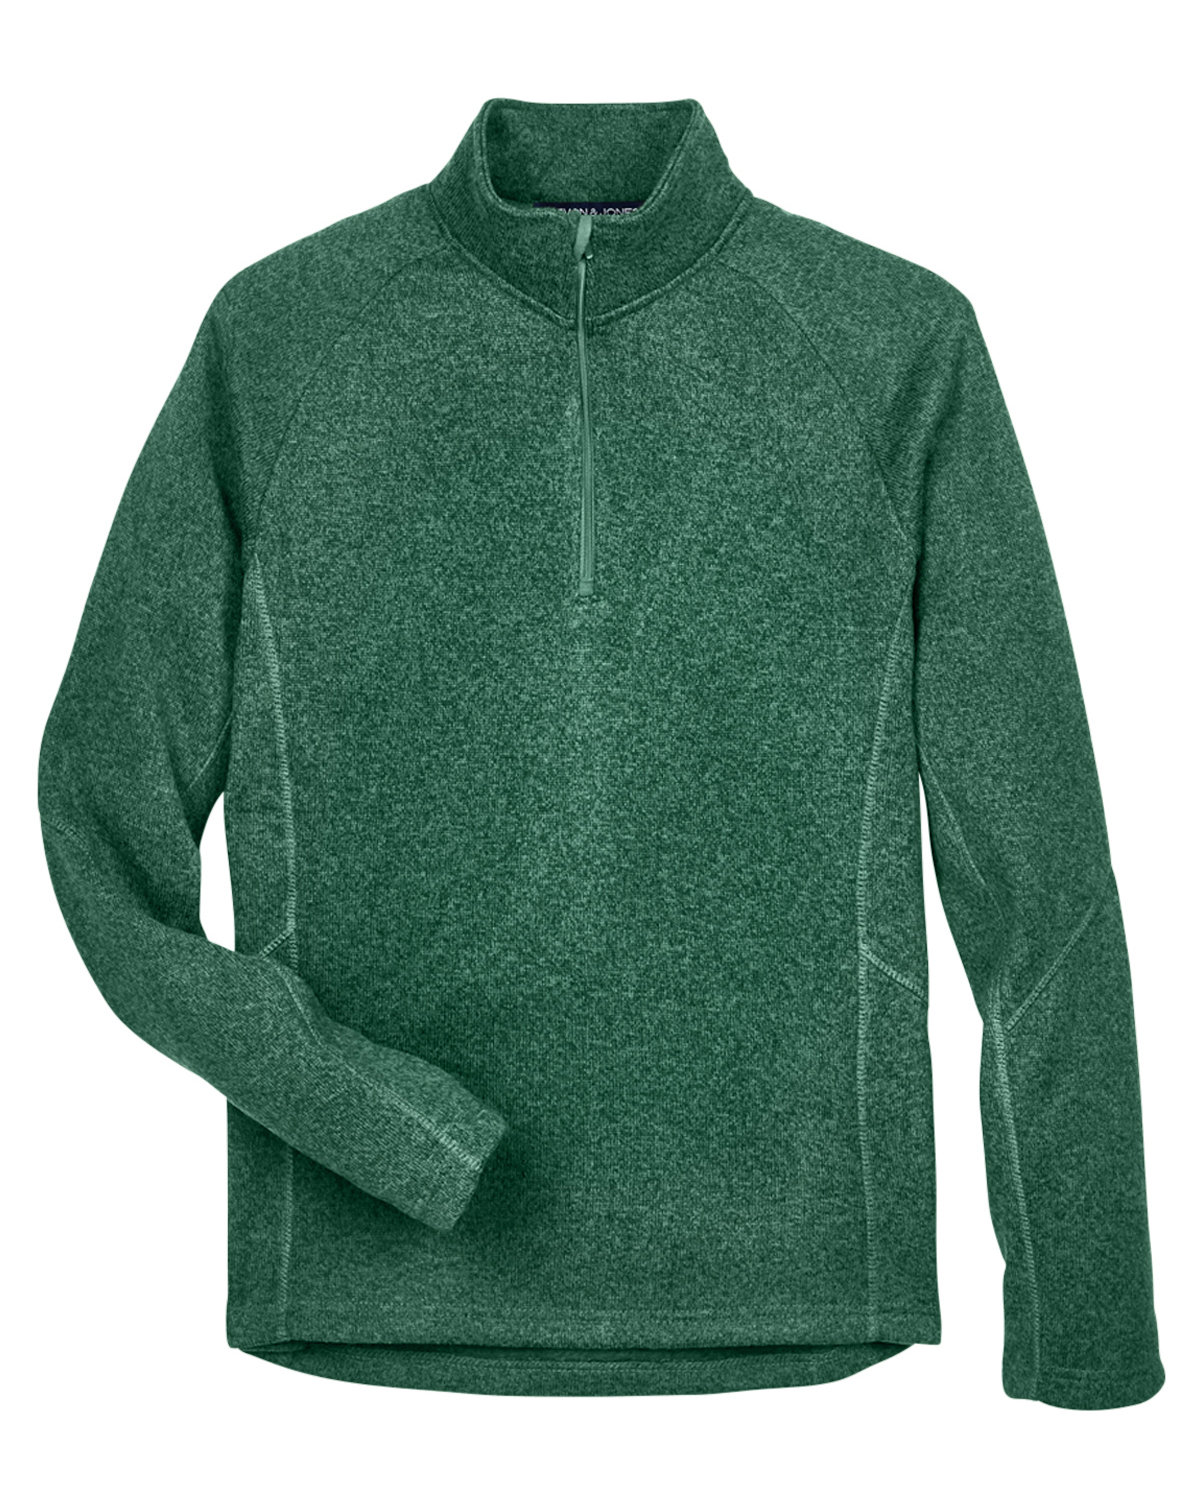 Devon & Jones Adult Bristol Sweater Fleece Quarter-Zip | alphabroder